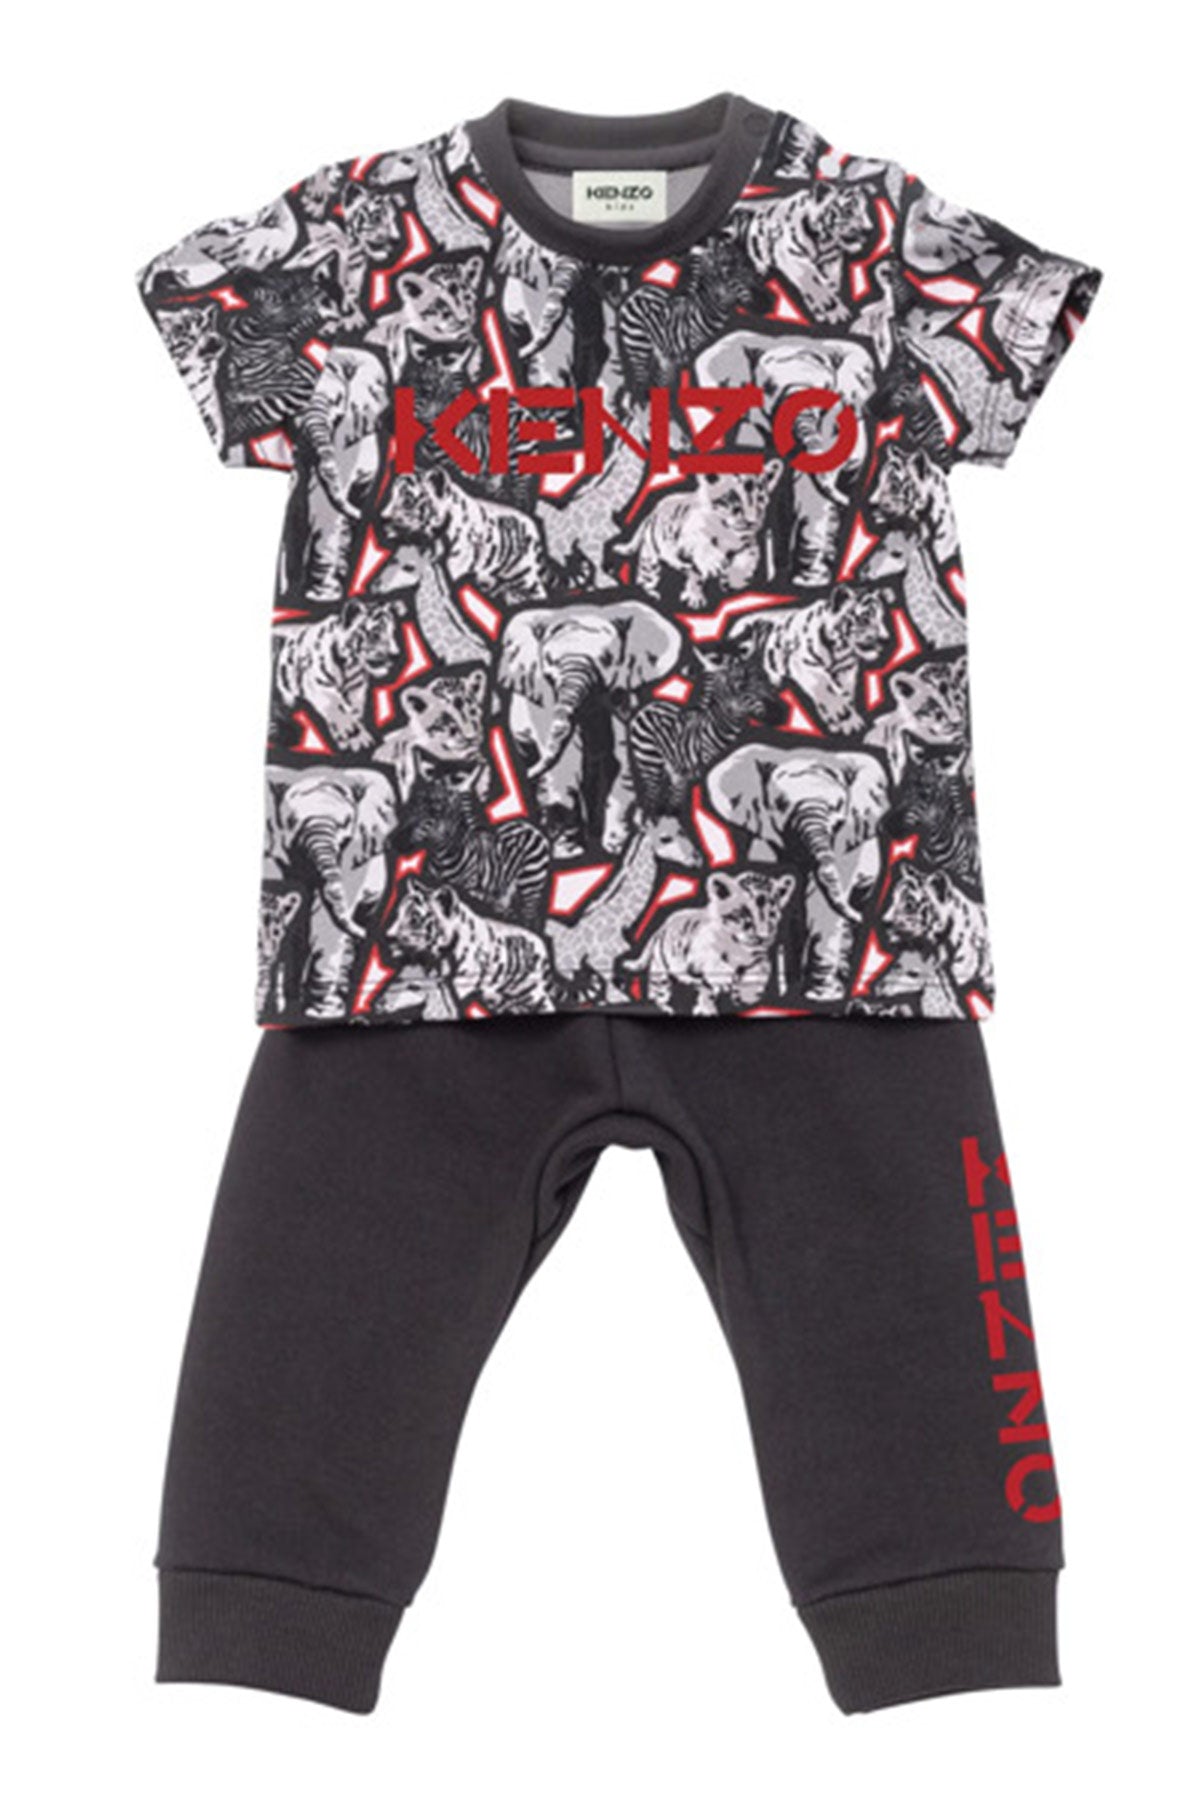 Kenzo Kids 2-3 Yaş Erkek Çocuk T-shirt Eşofman Altı Takımı-Libas Trendy Fashion Store